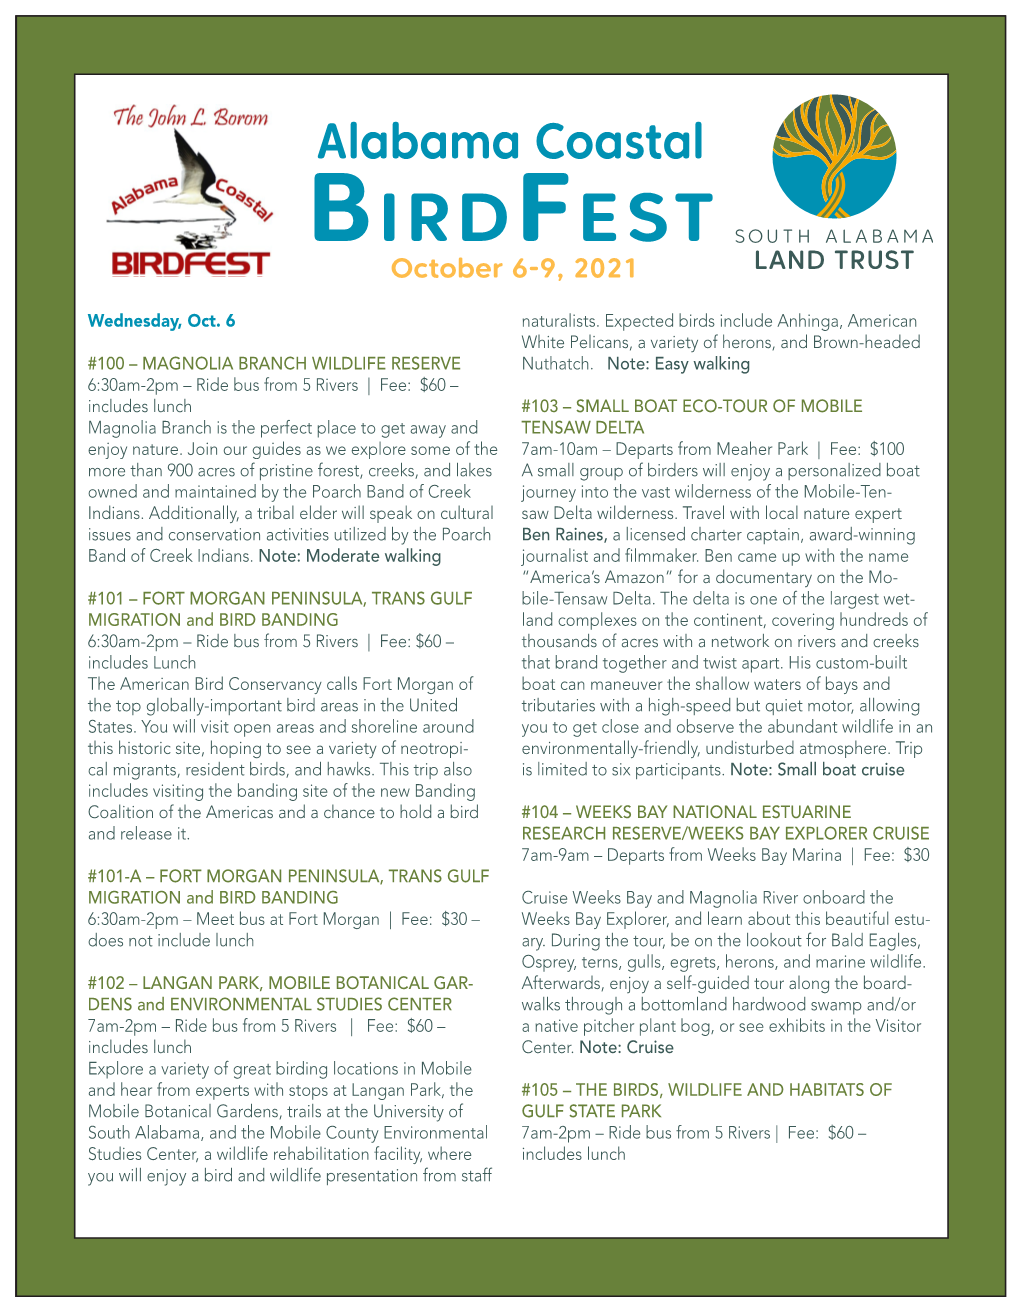 Birdfest October 6-9, 2021